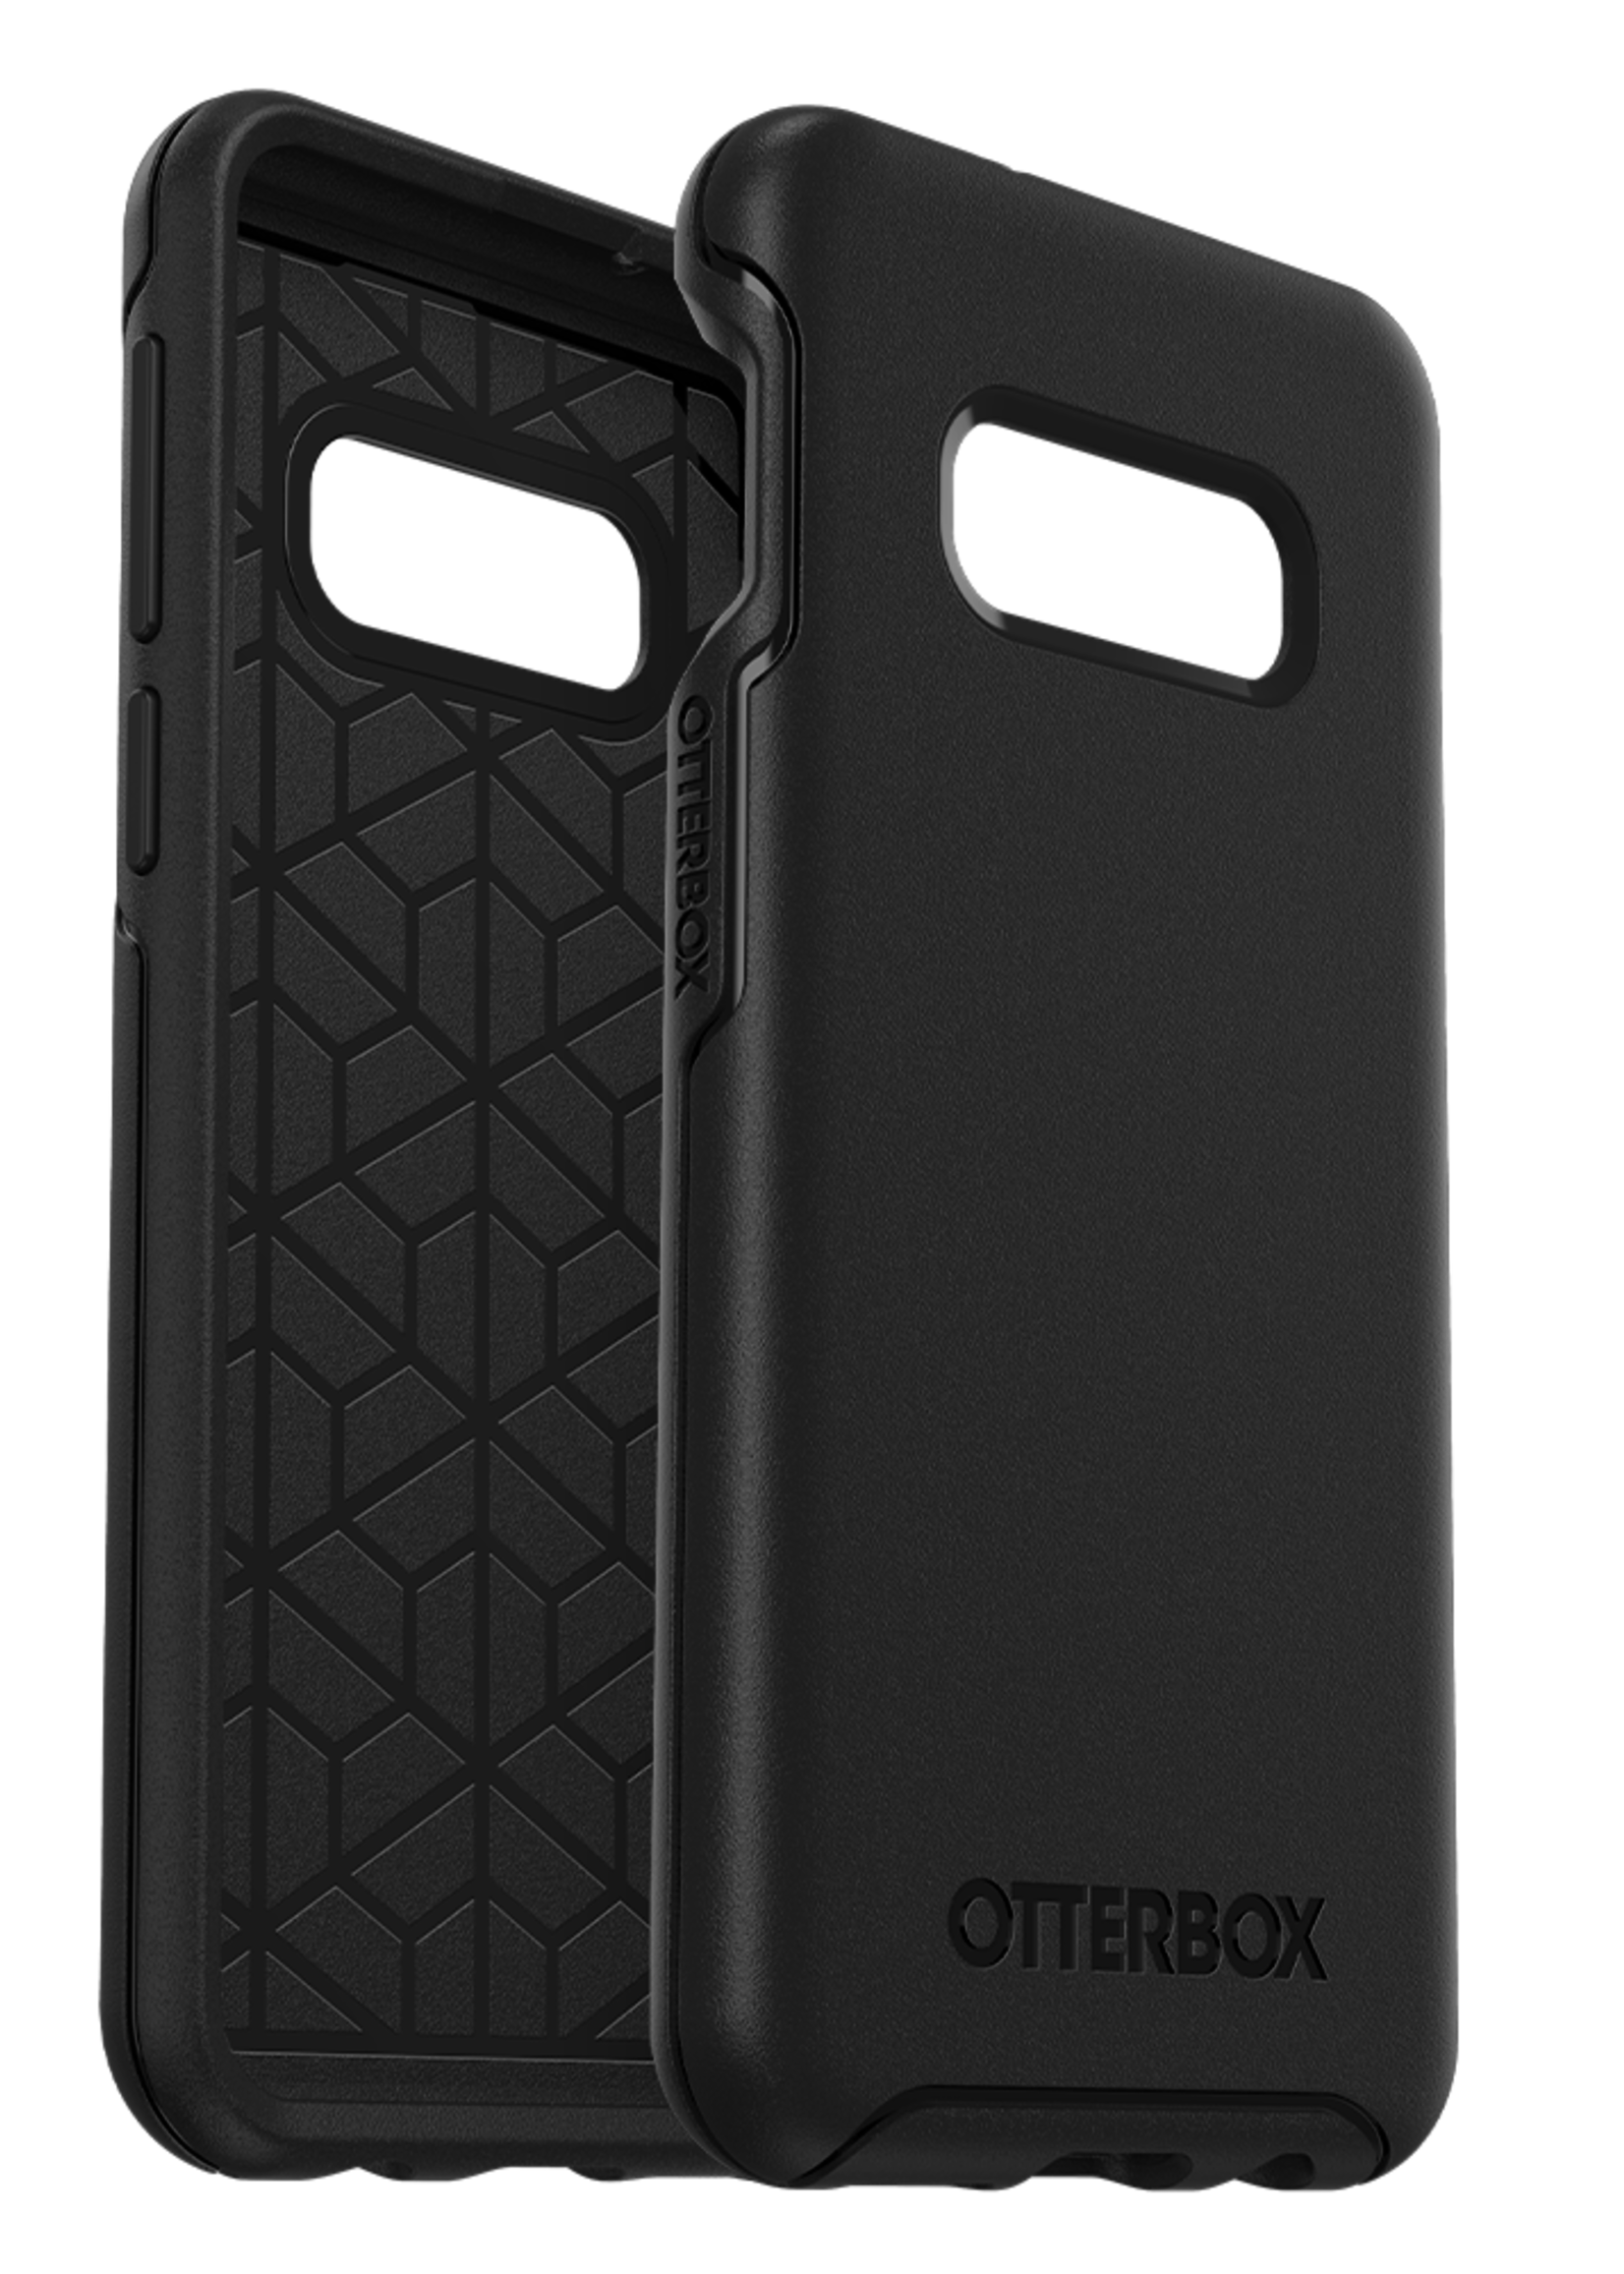 Otterbox OtterBox - Symmetry Case for Samsung Galaxy S10e - Black